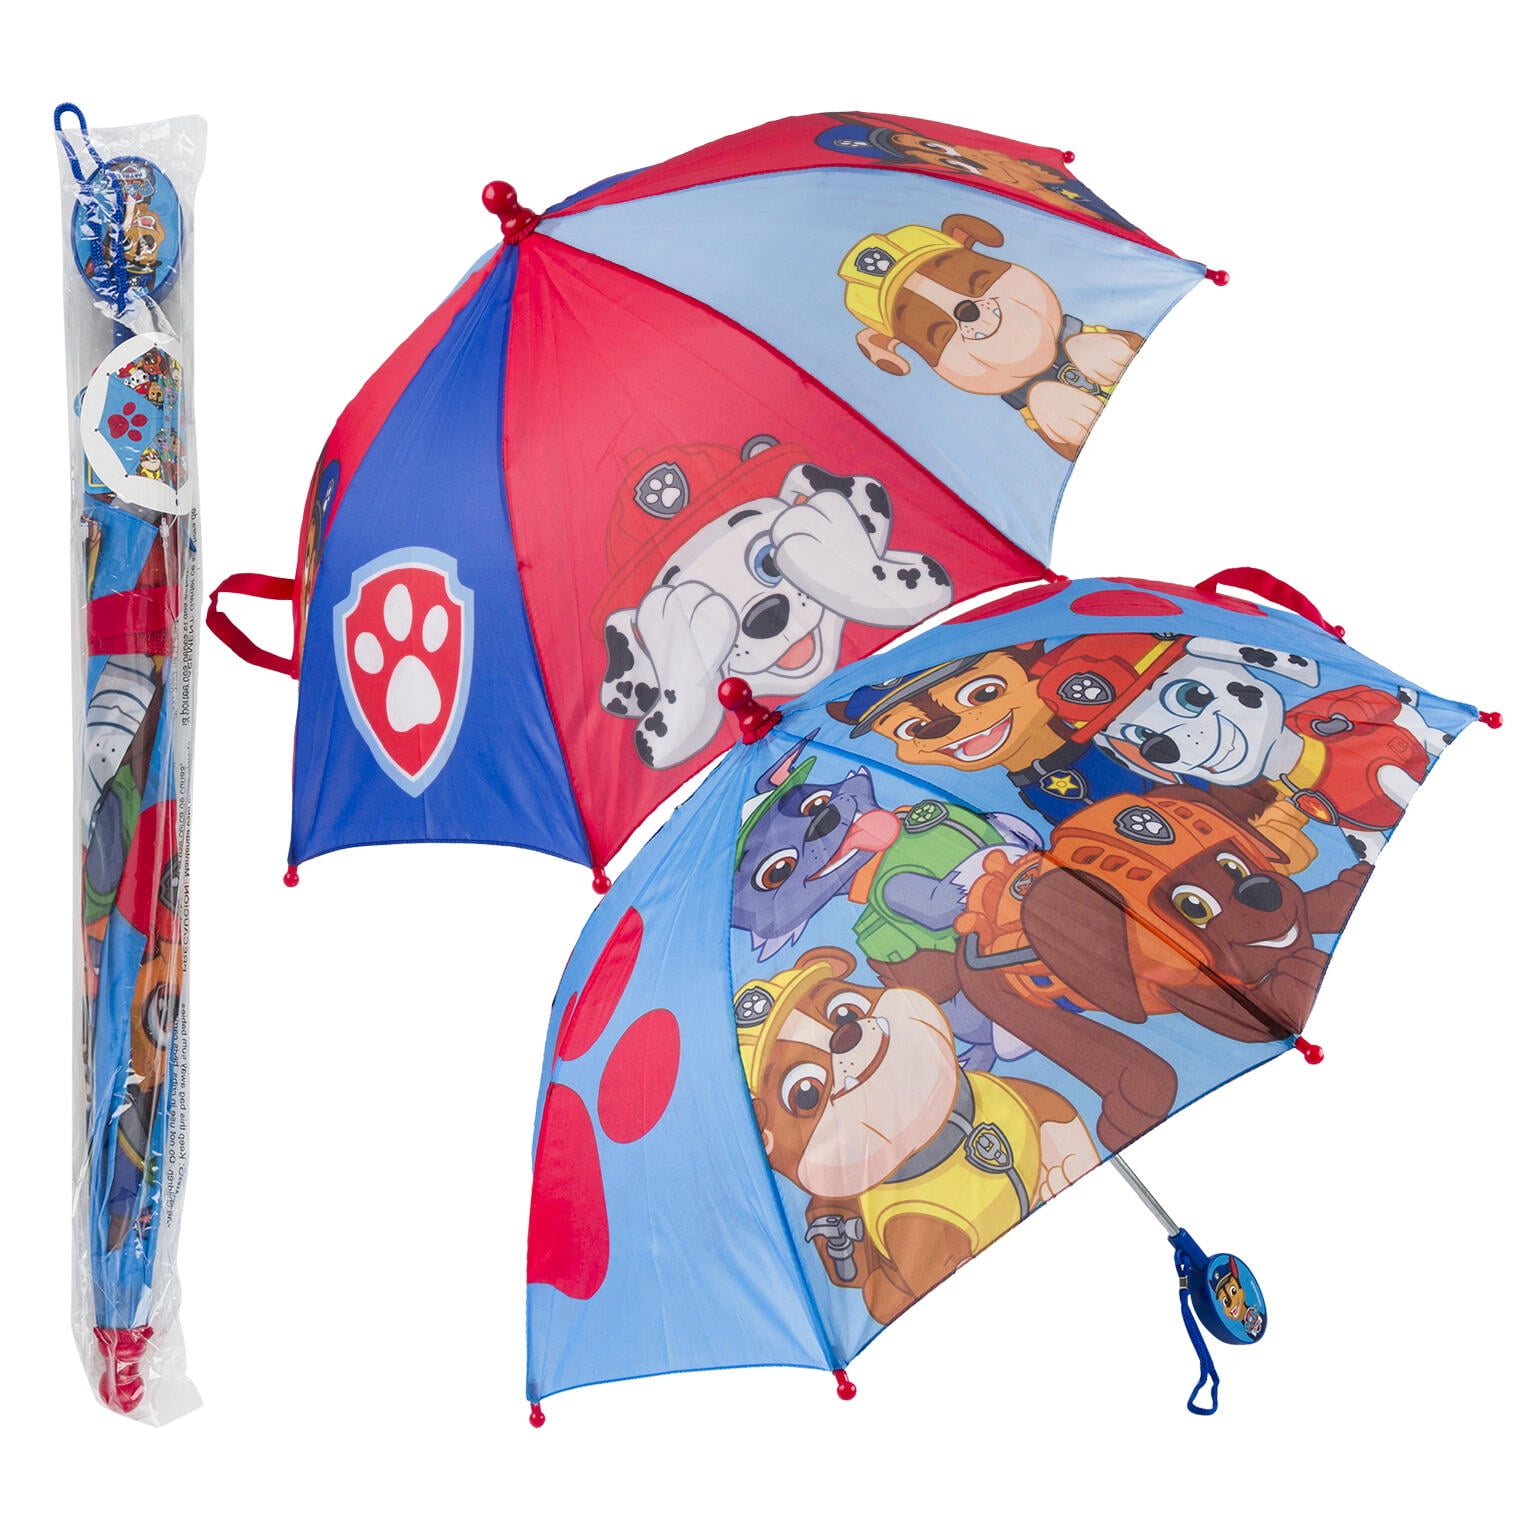 PJ MASKS DOME Umbrella Kids Childrens Umbrella School Official Licensed Boy 4841 